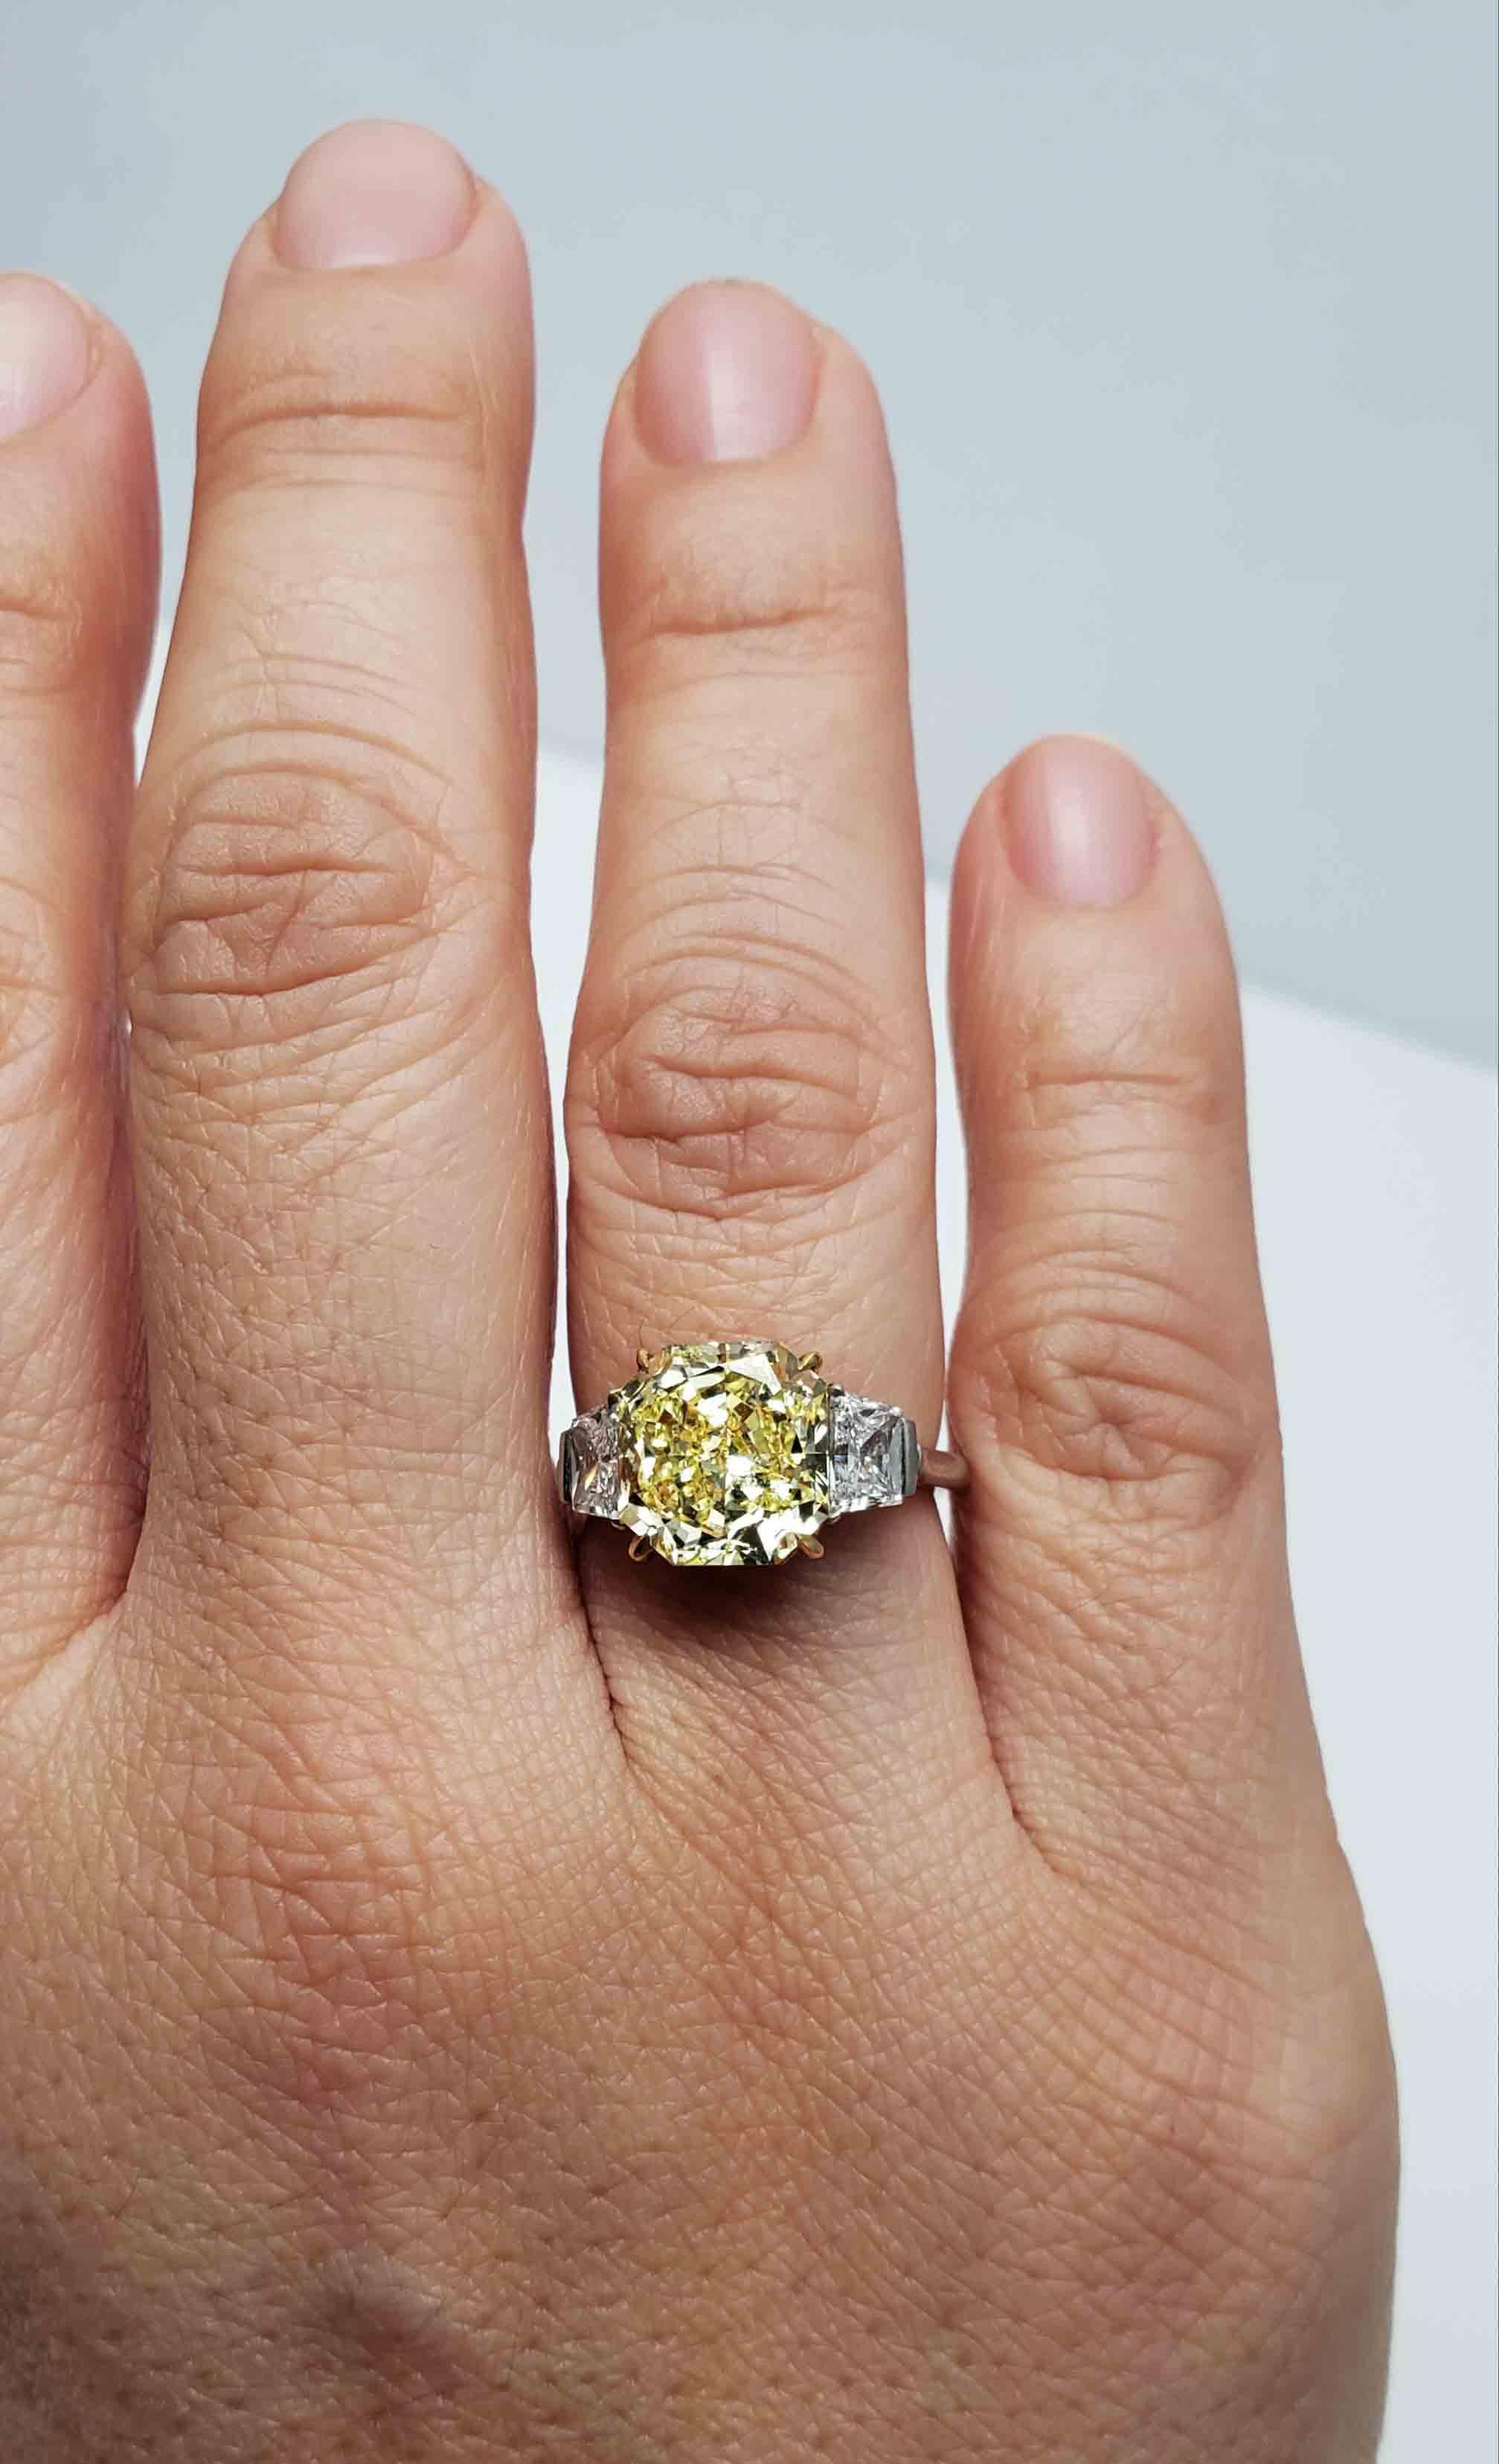 4 carat yellow diamond ring